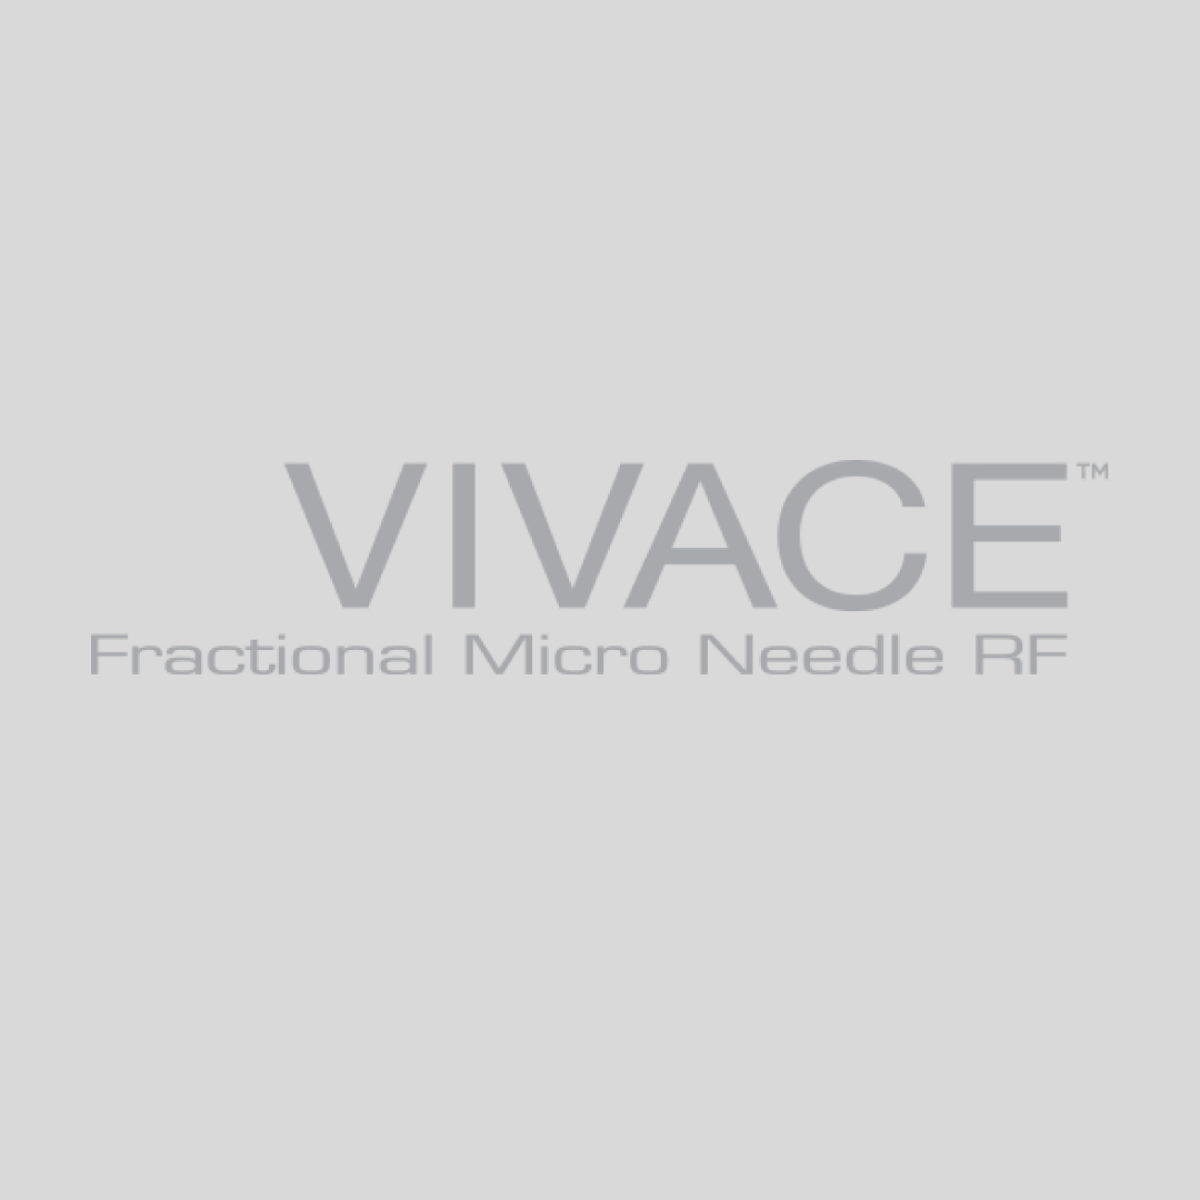 Vivace Microneedle RF®